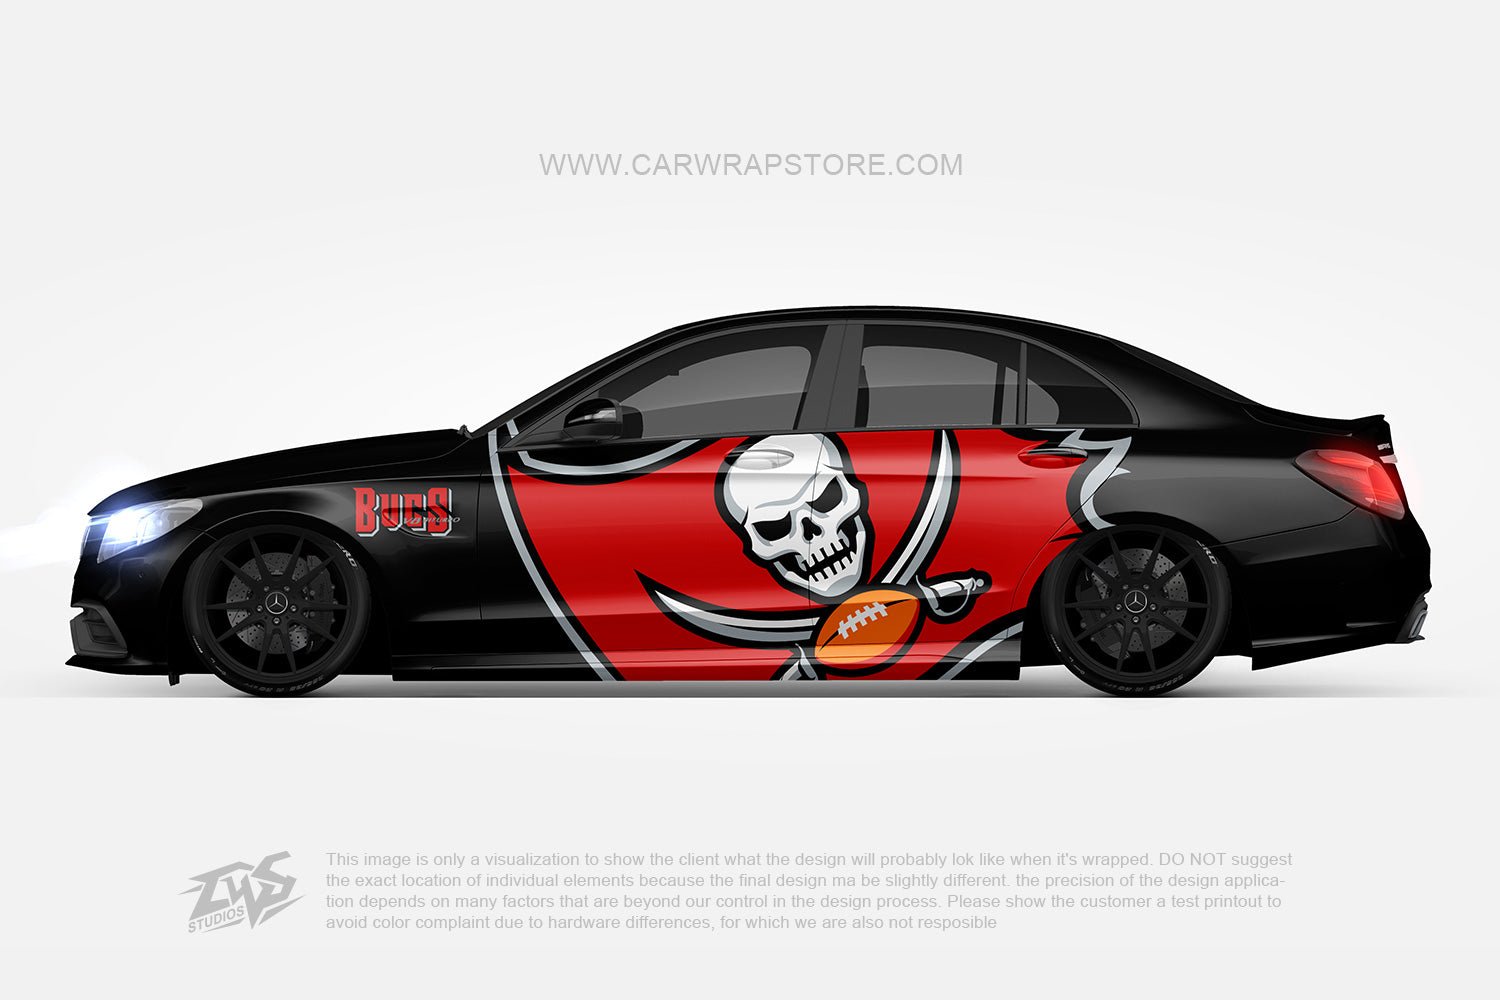 Tampa Bay Buccaneers【NFL-06】 - Car Wrap Store